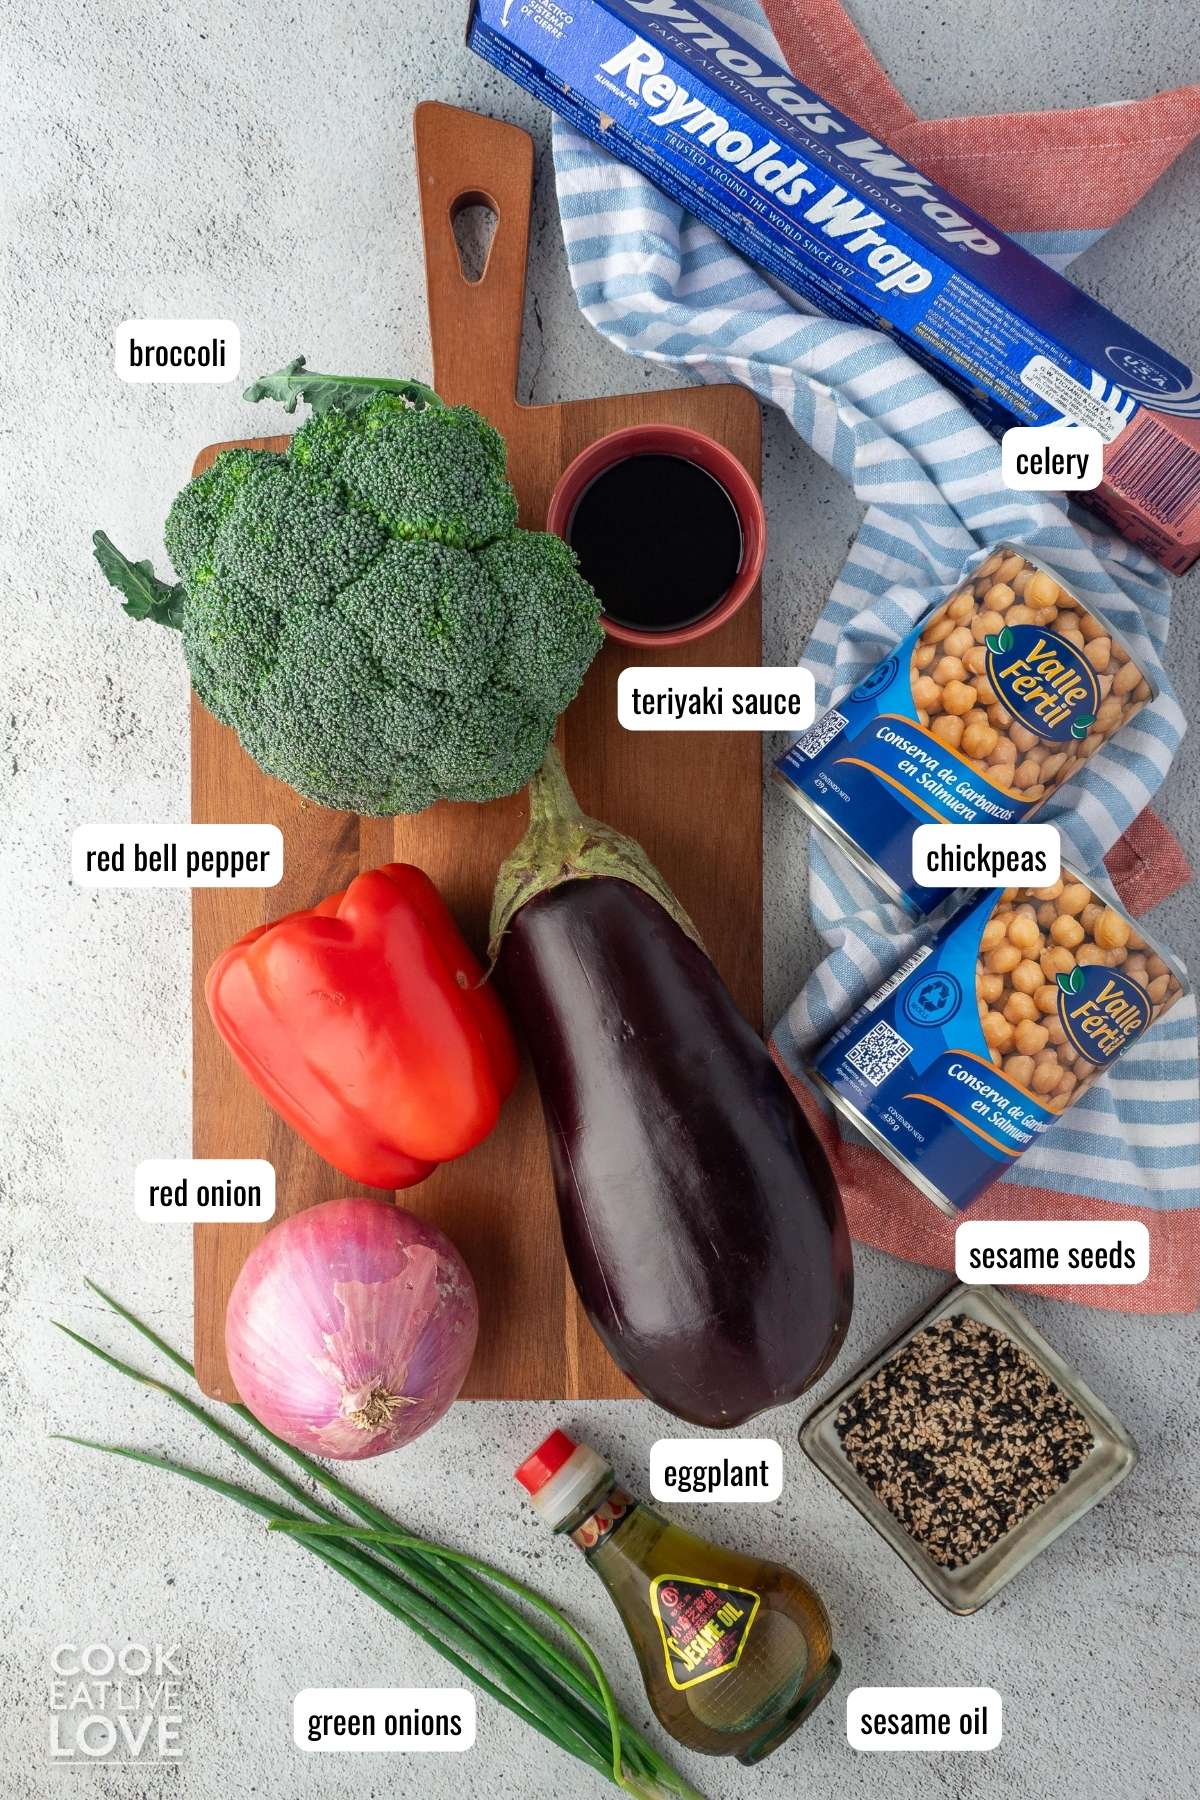 Ingredients to make baked veggies in foil.